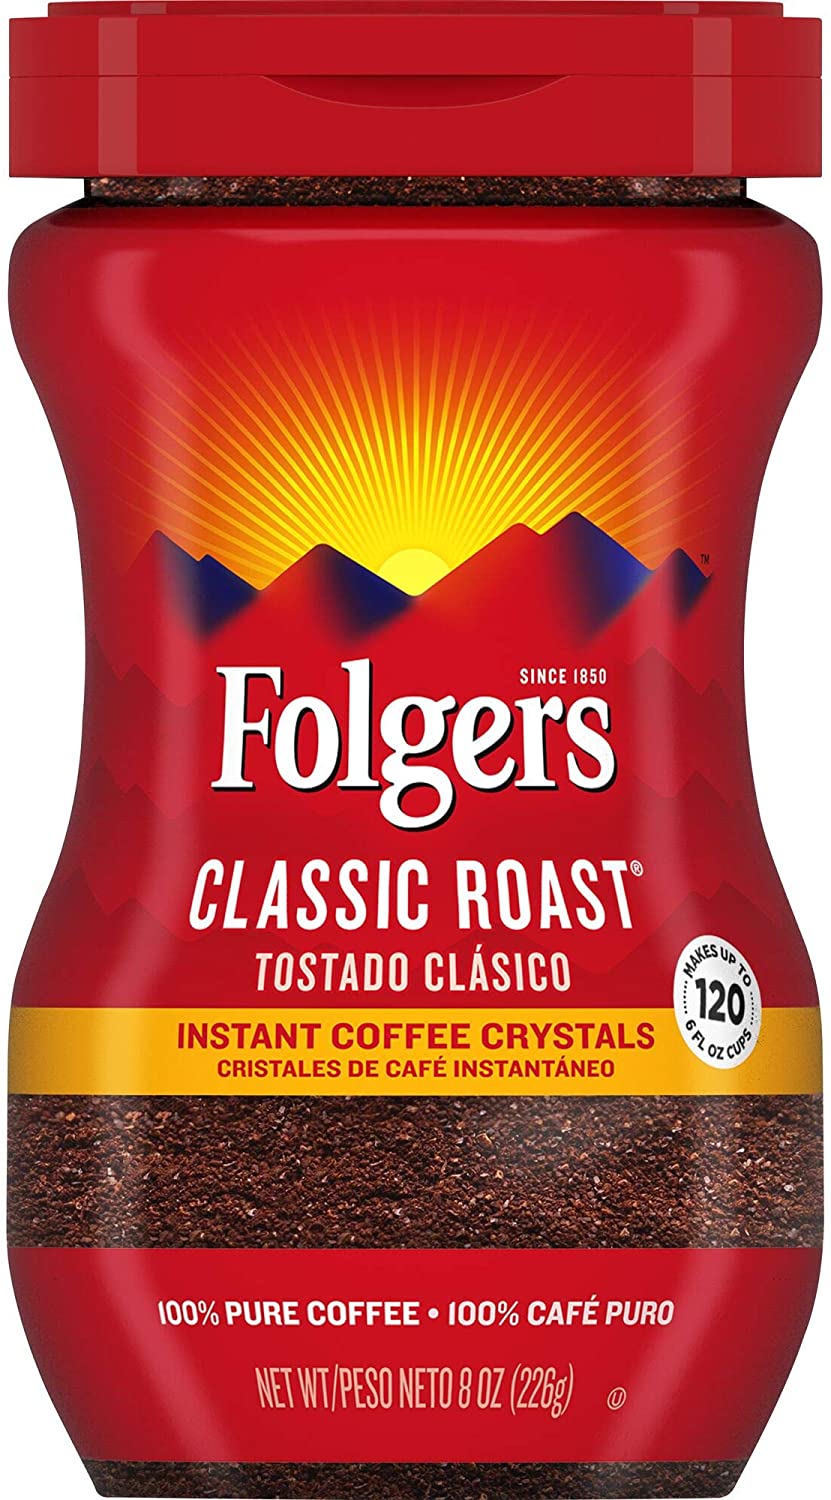 Folgers classic roast instant coffee